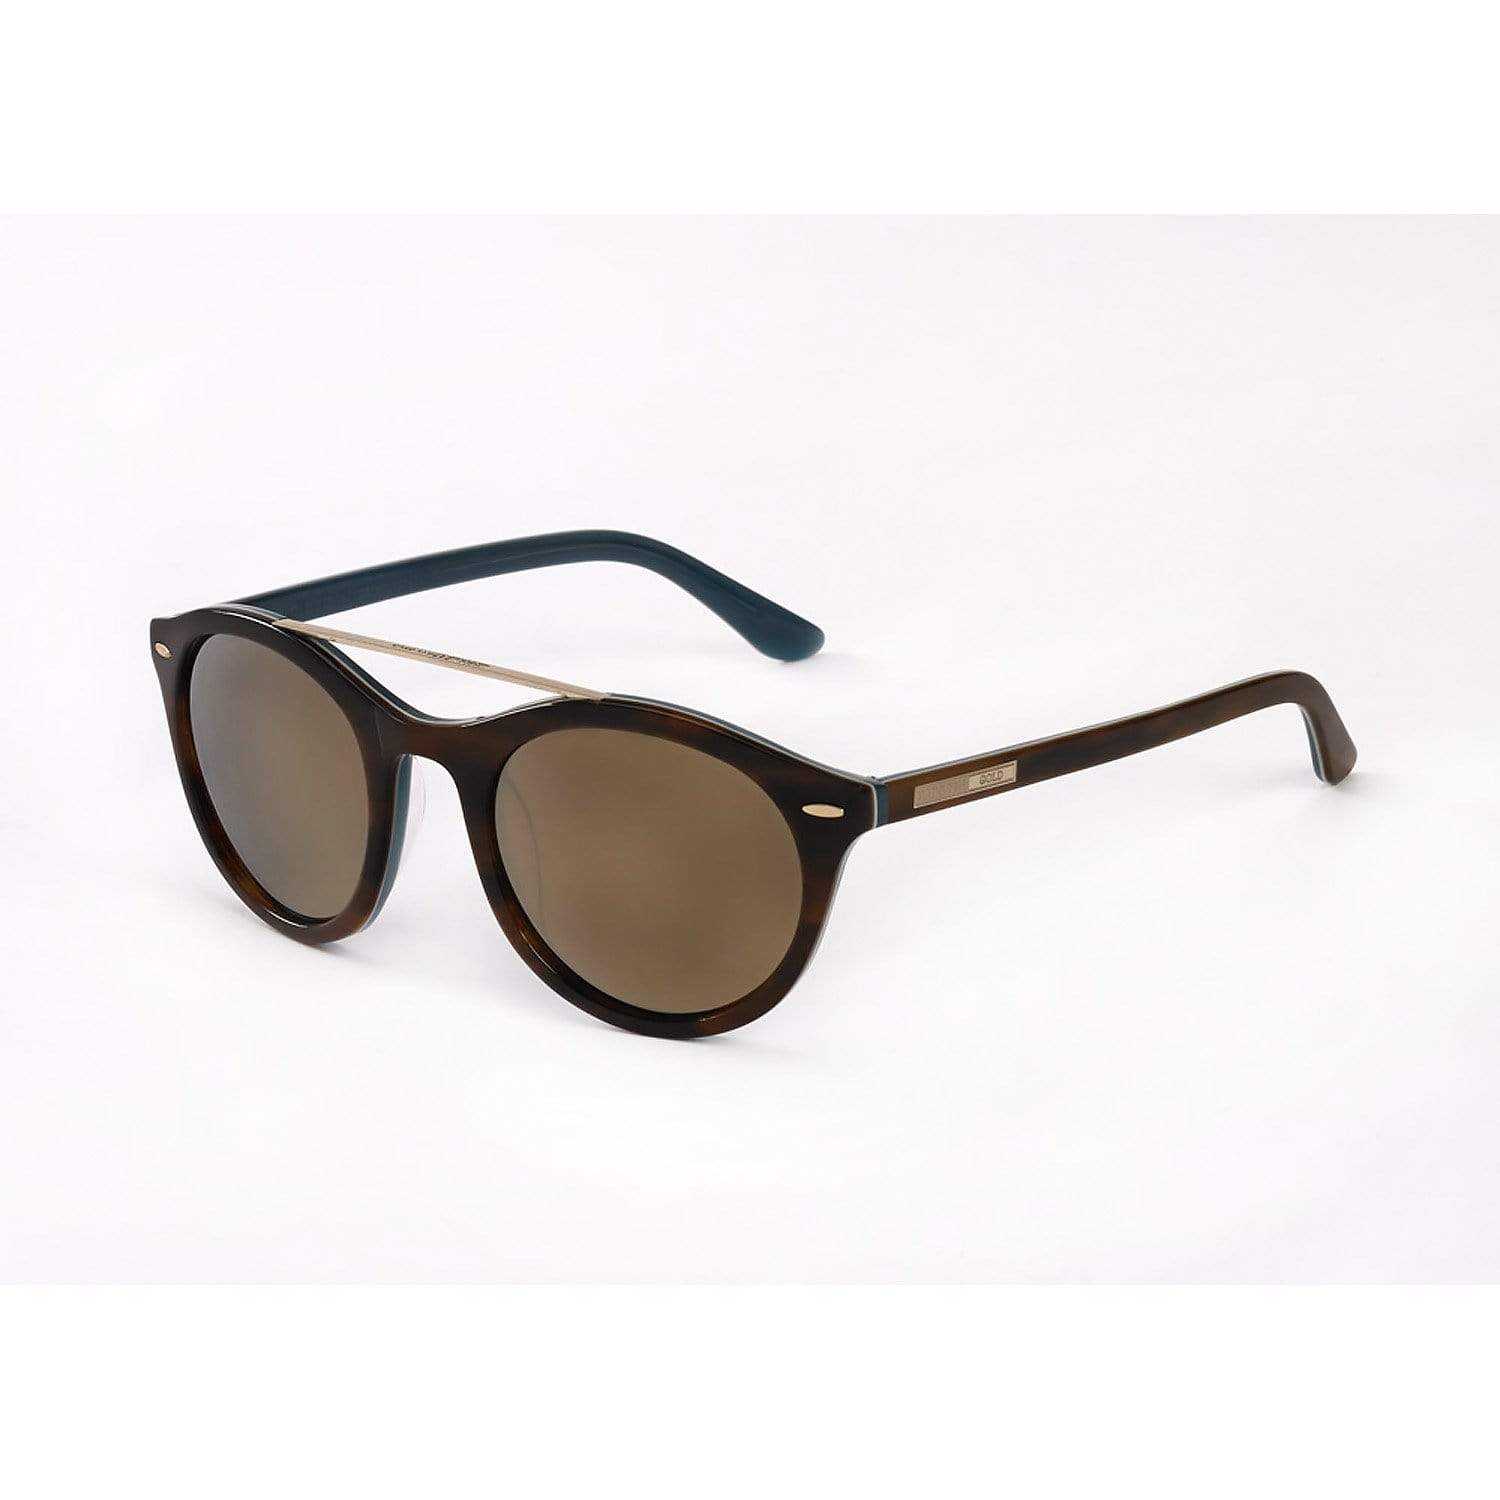 Hang Ten Gold Apparel : Eyewear - Sunglasses Hang Ten Gold GoldSchool-Demi White Blue/Gradient Brown Lens